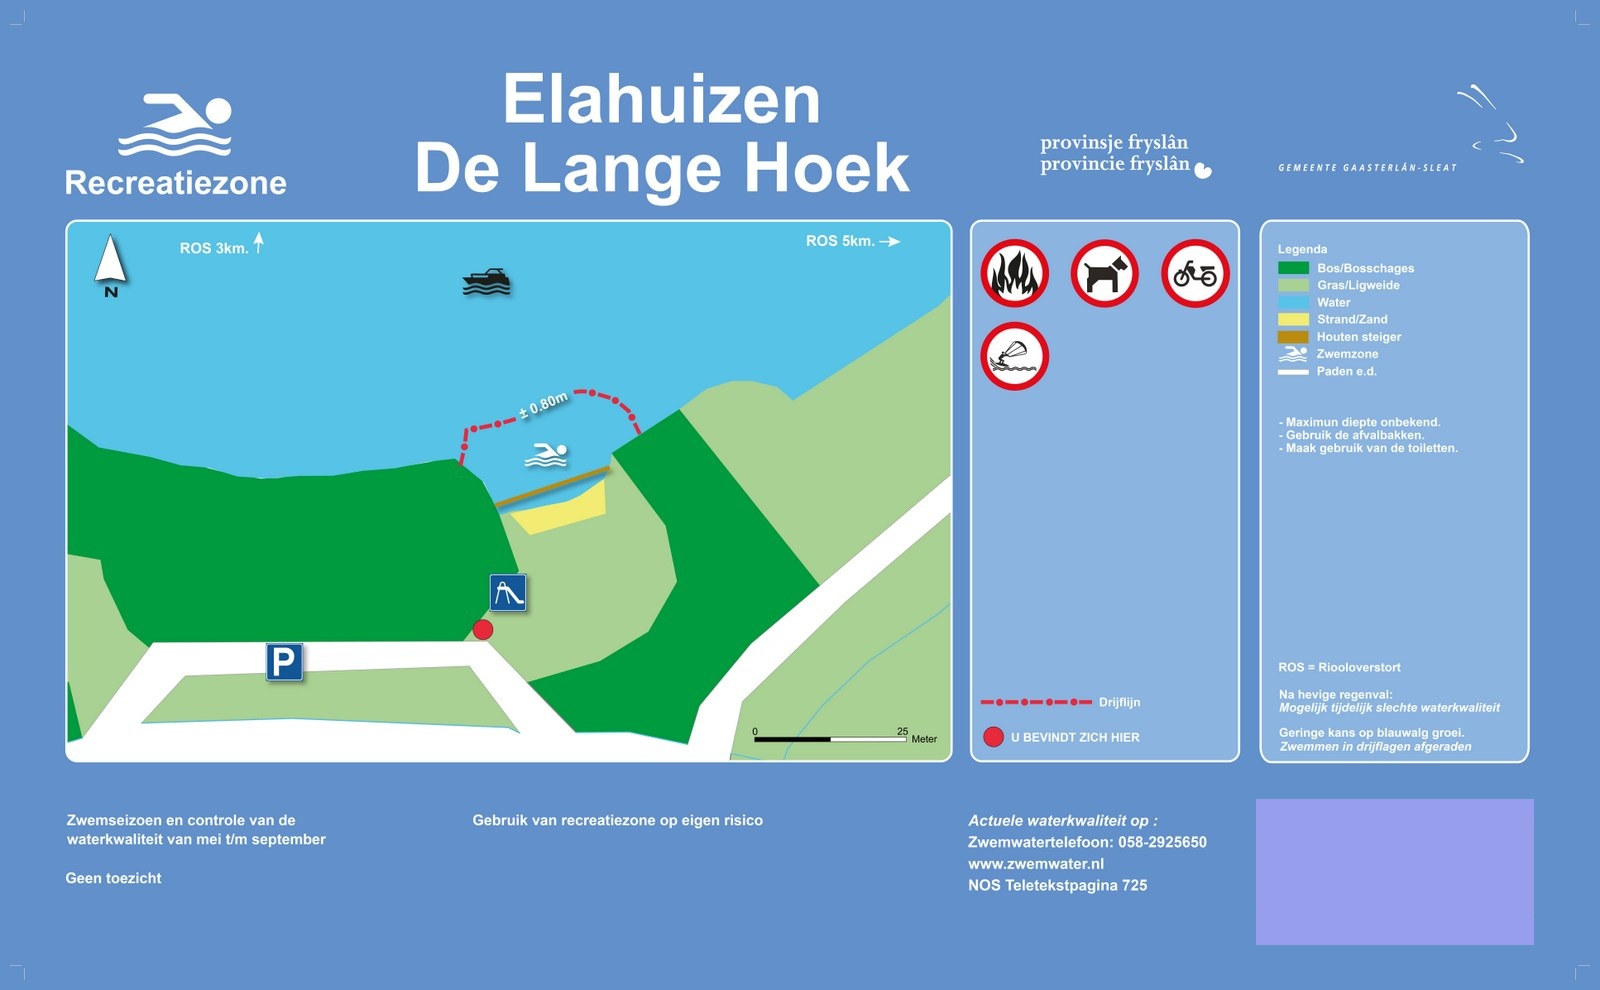 The information board at the swimming location Elahuizen De Lange Hoek